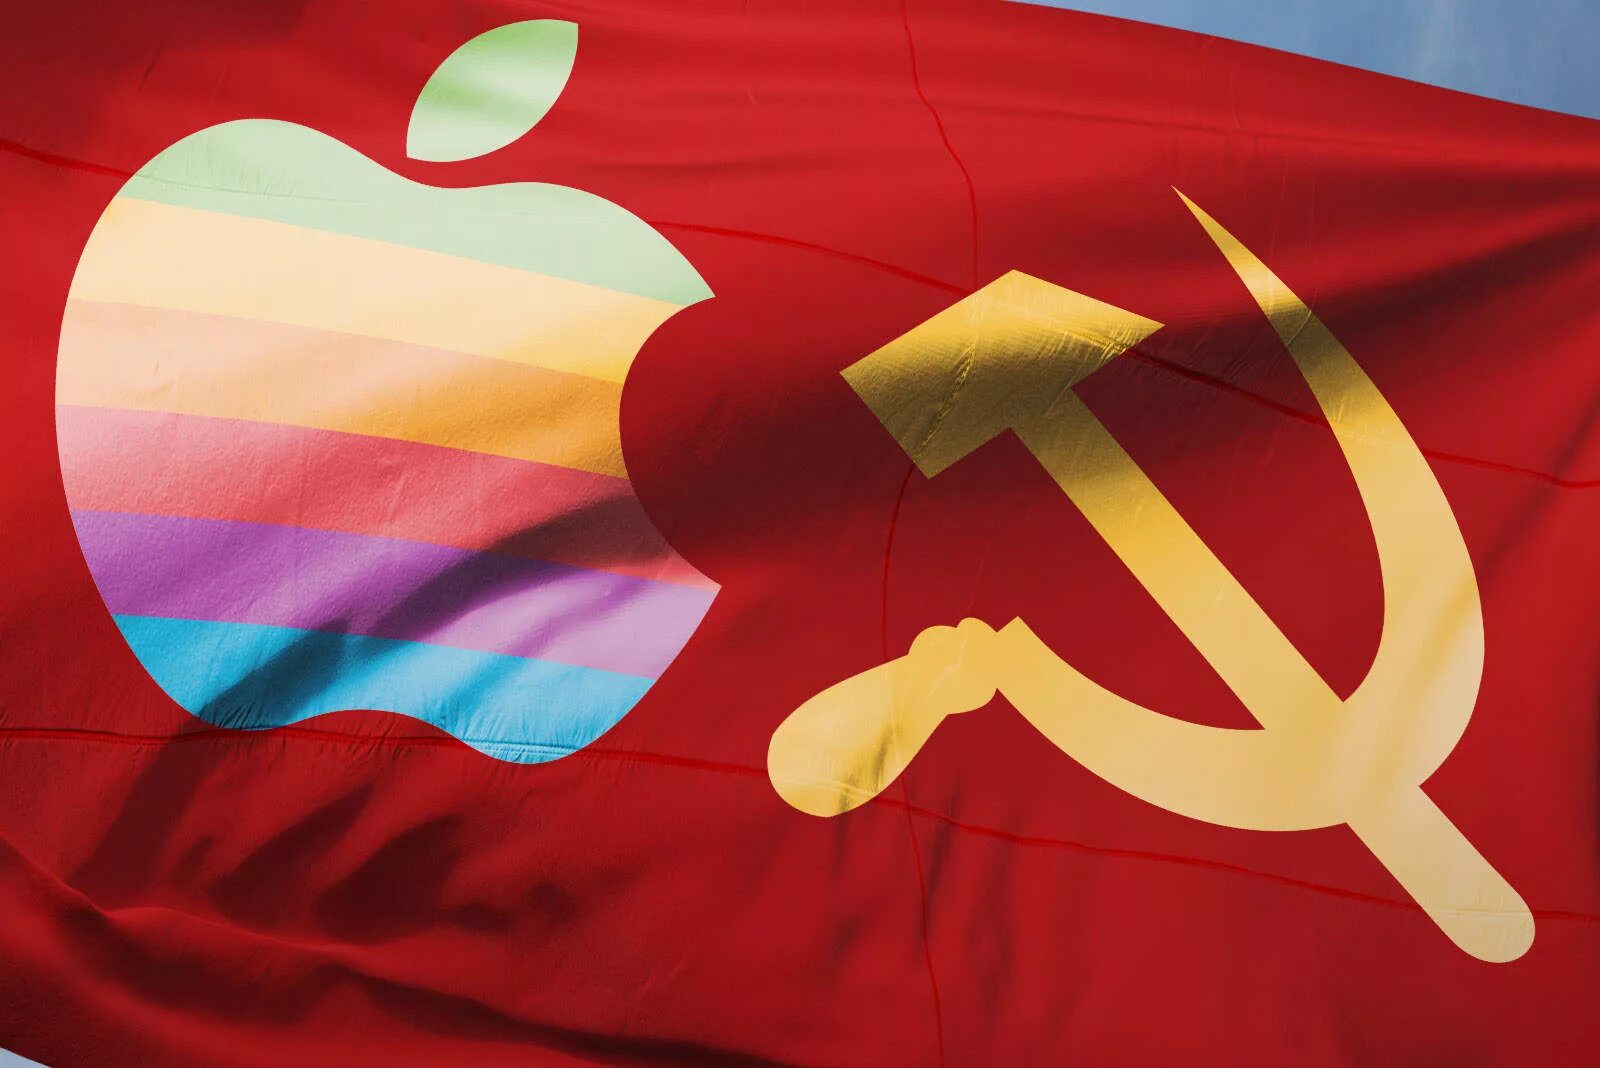 Ссср 2. Эпл СССР. СССР 2.0. Флаг Apple. Apple USSR.